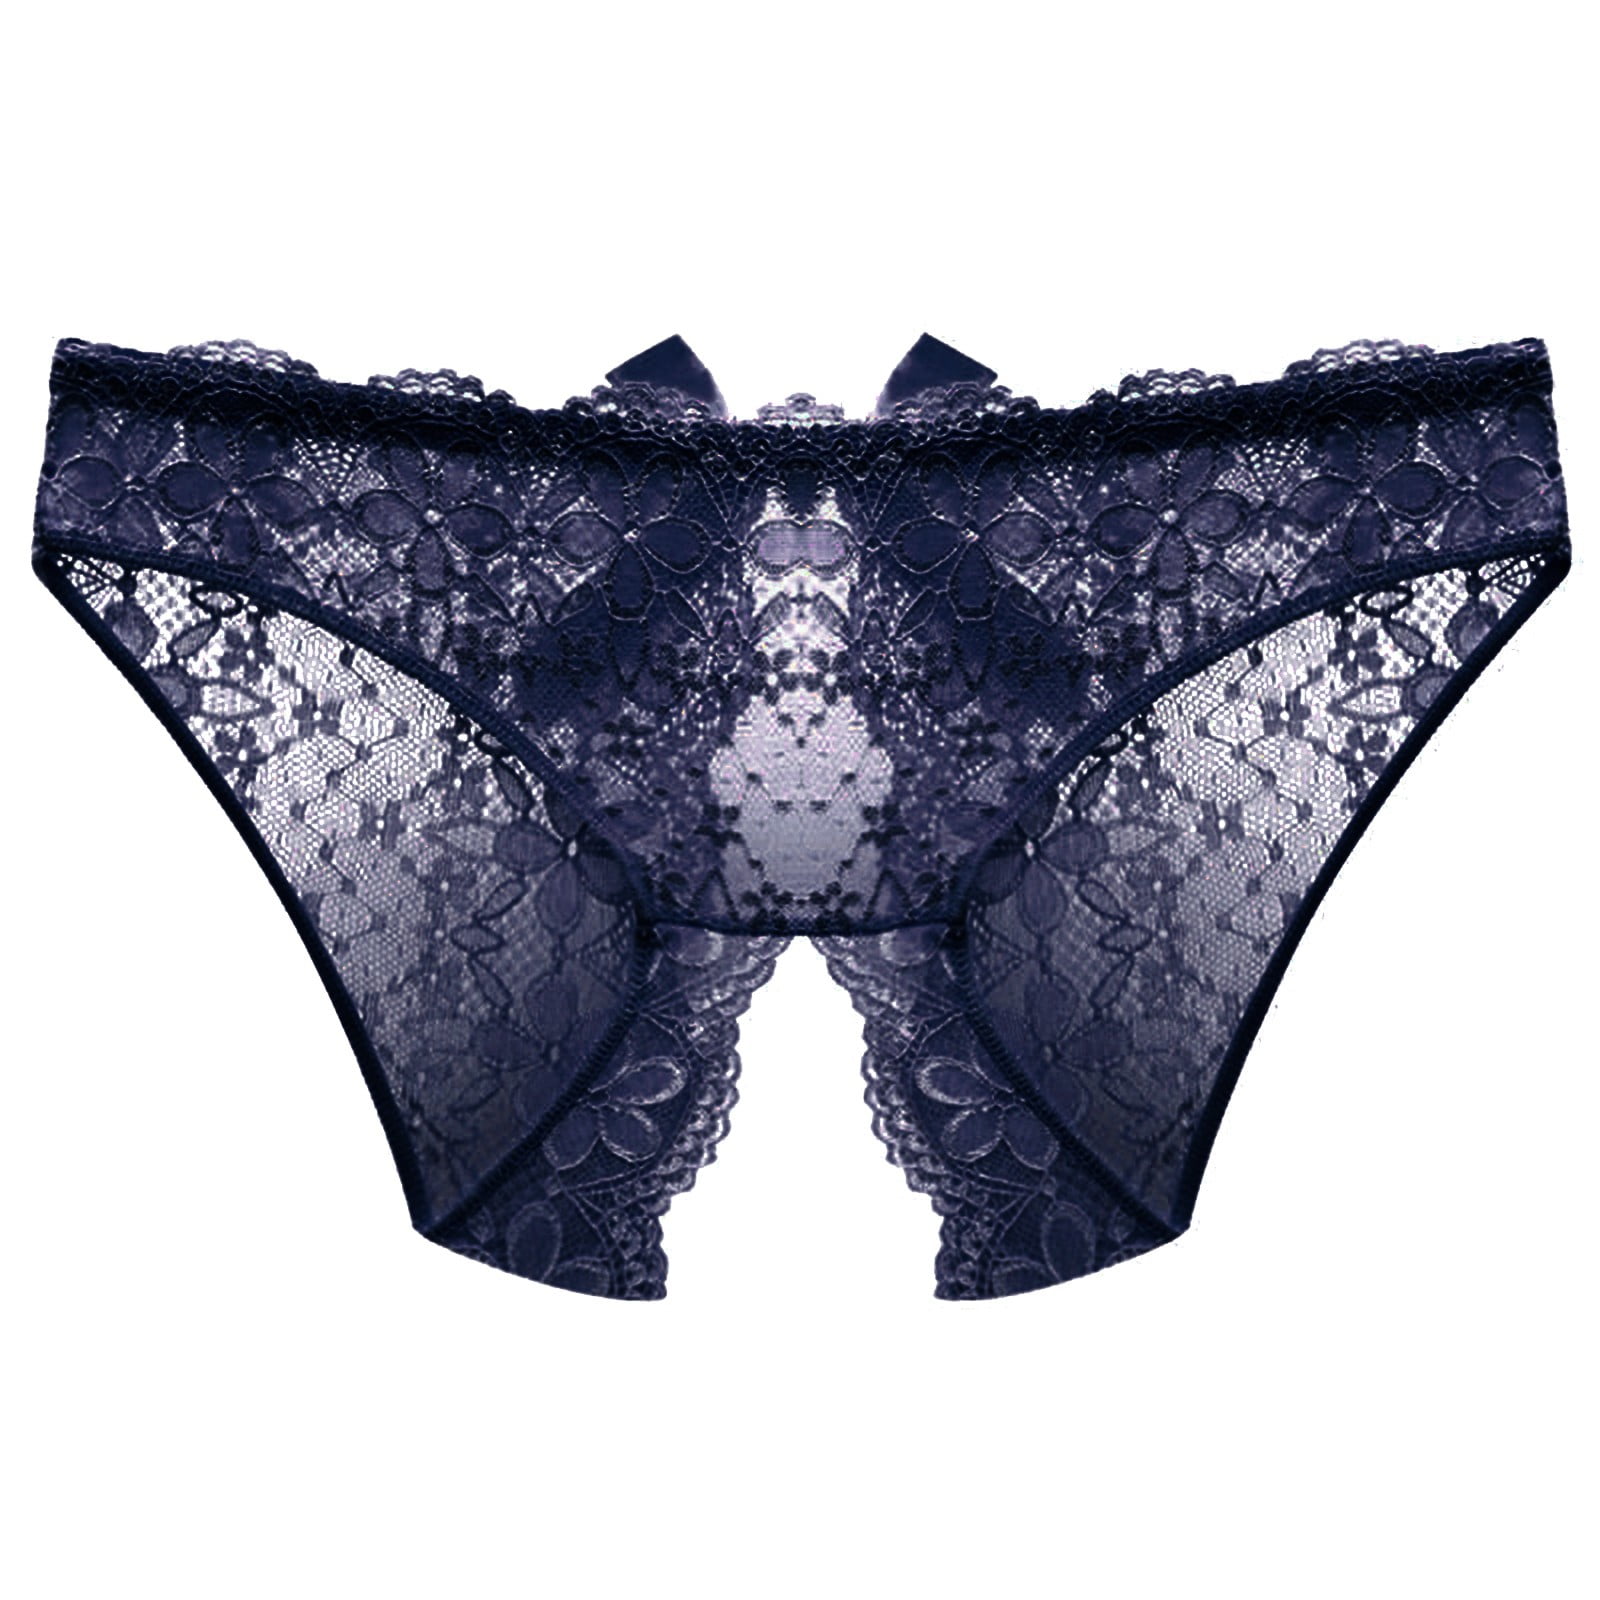 Women Lace Mesh Open Crotch Briefs G-string Thong Panties Underwear Lingerie